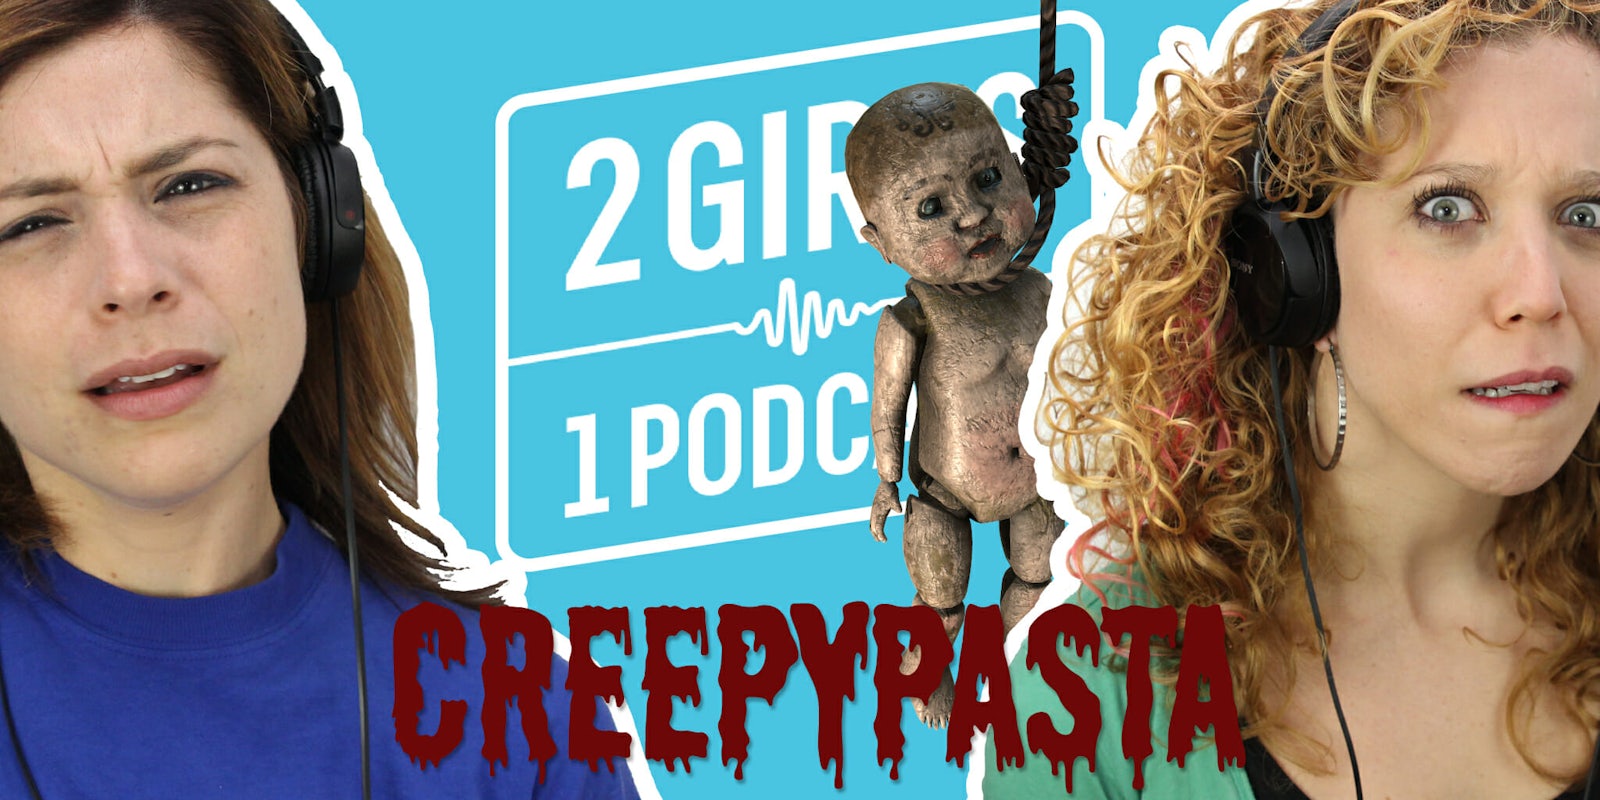 2 Girls 1 Podcast CREEPYPASTA